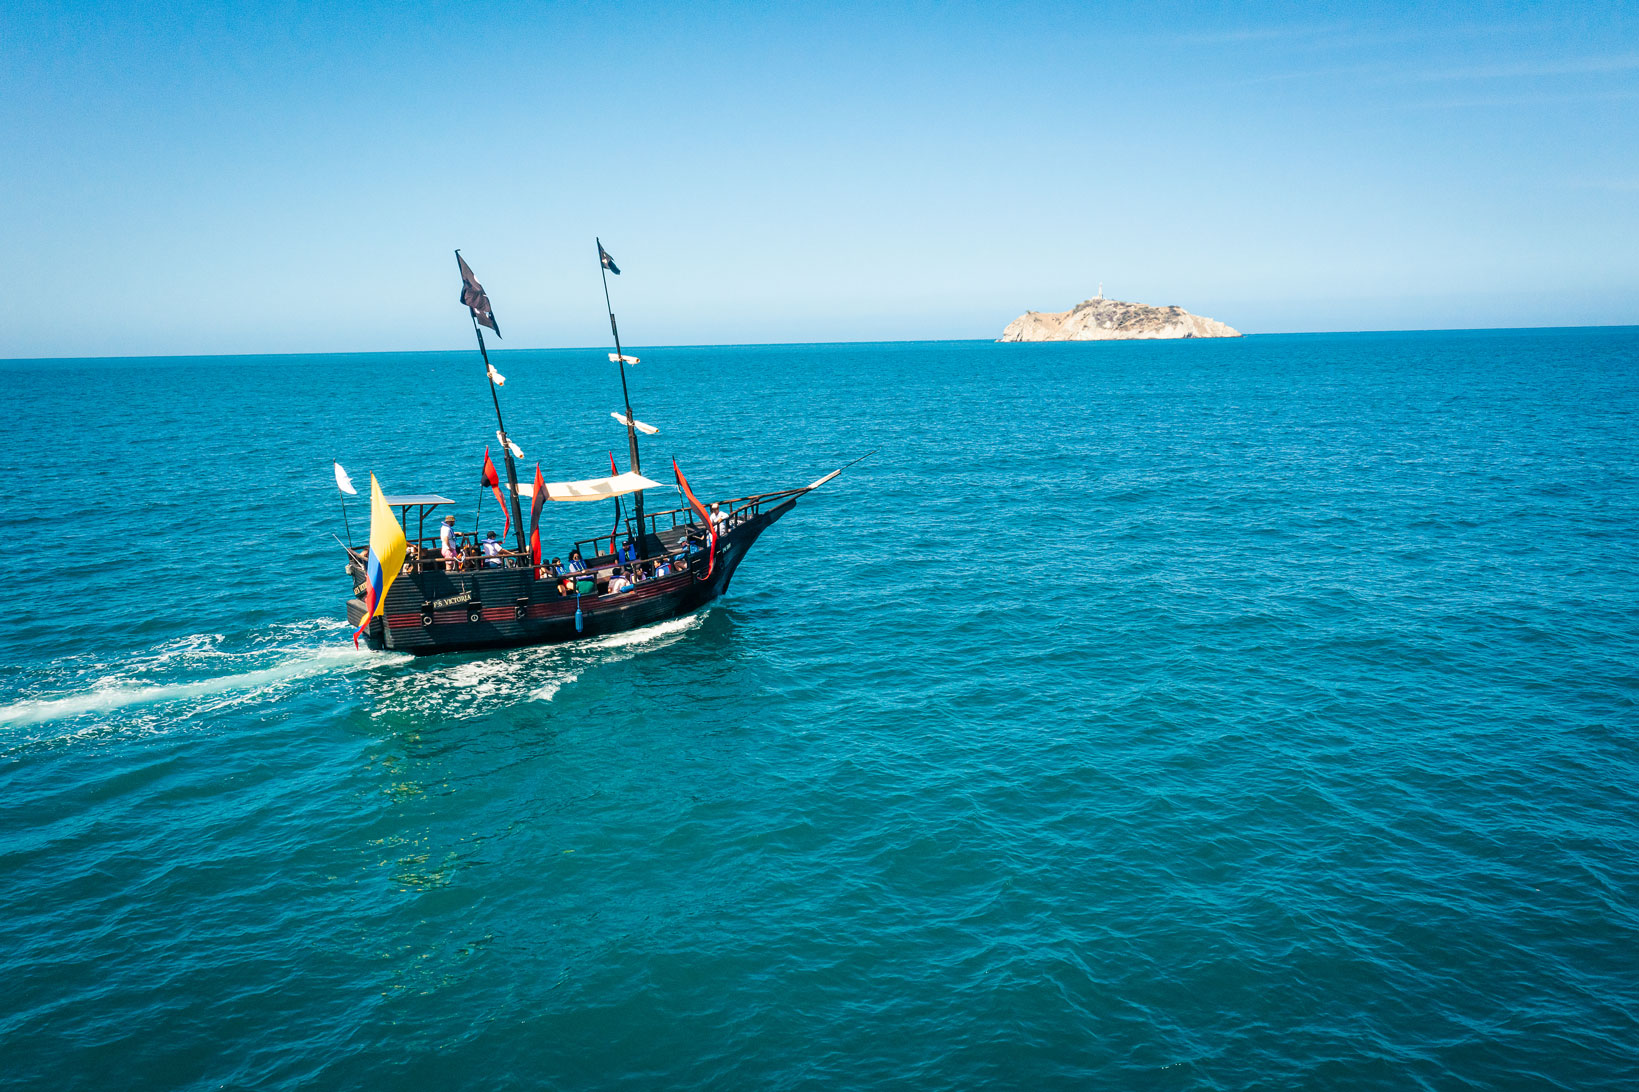 Pirate’s boat Adventure|Visit Santa Marta